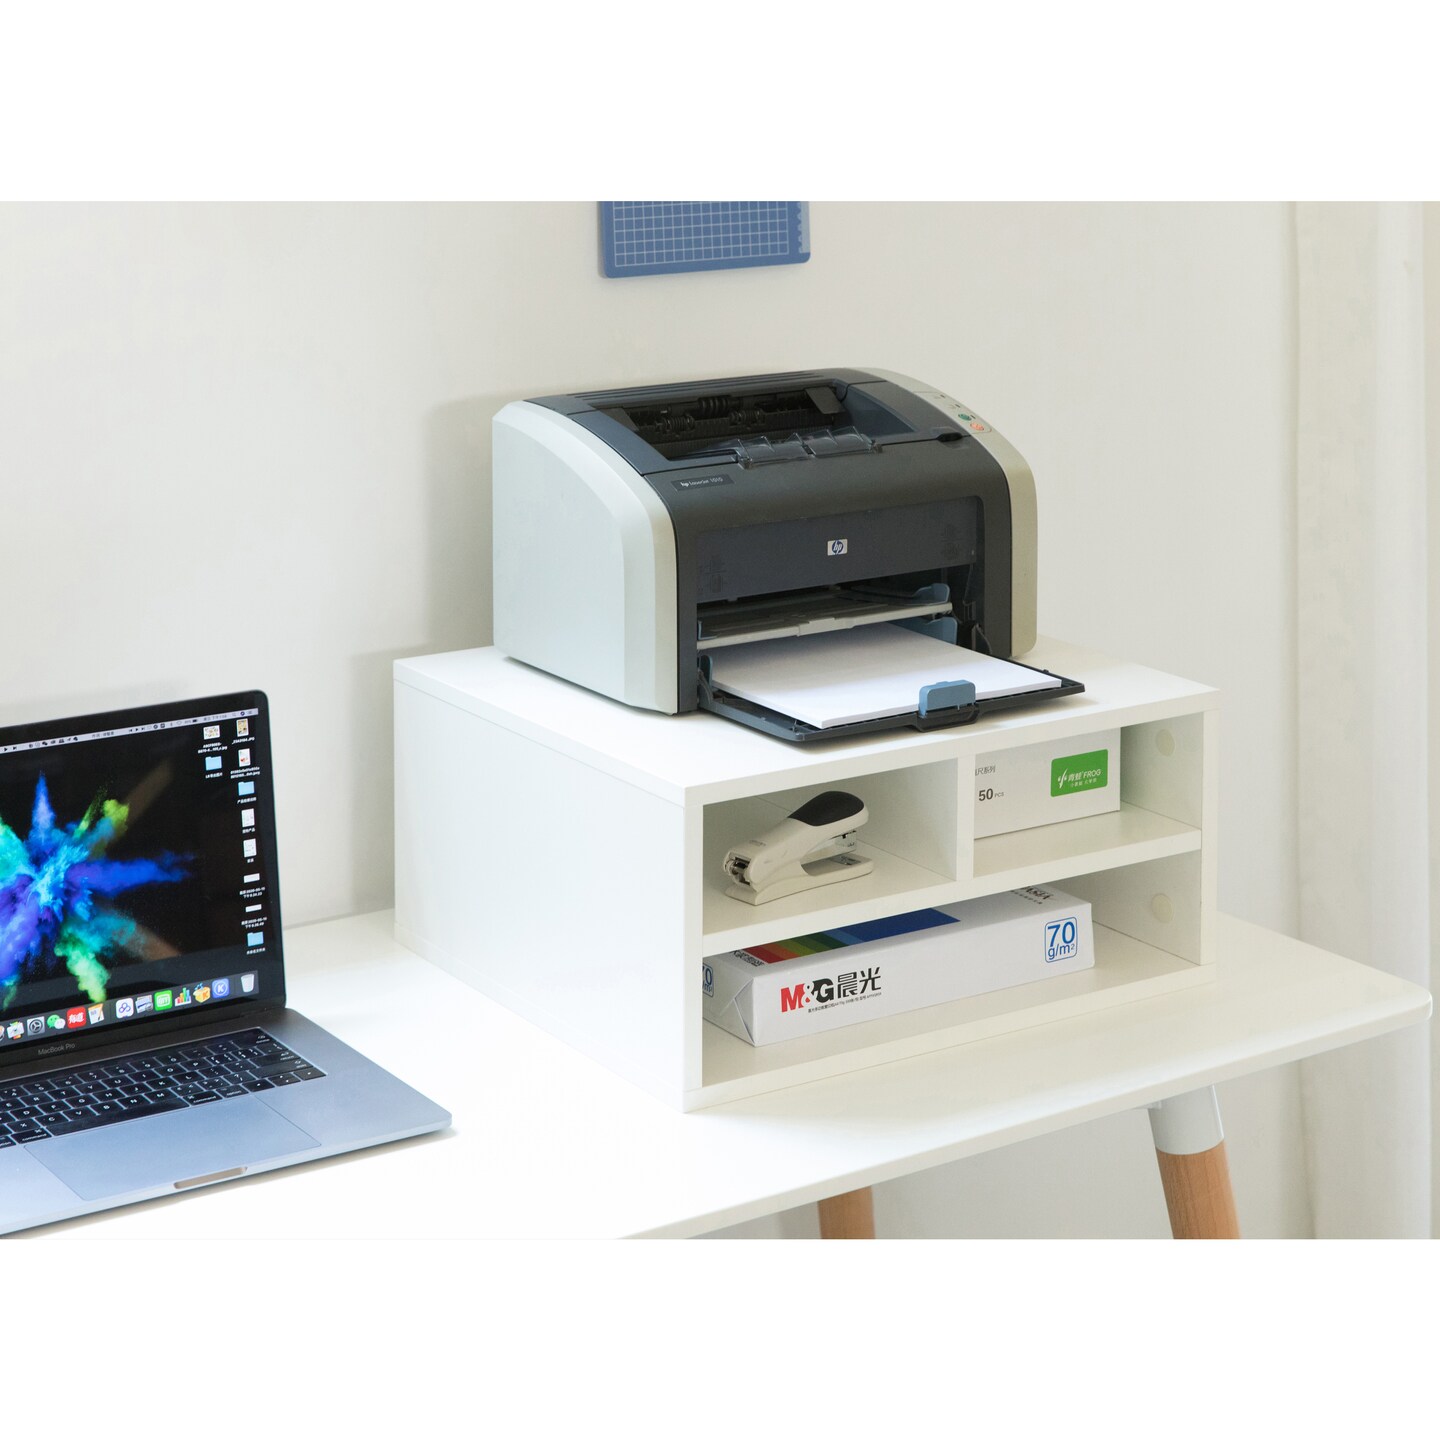 Basicwise Printer Stand Shelf Wood Office Desktop Compartment Organizer